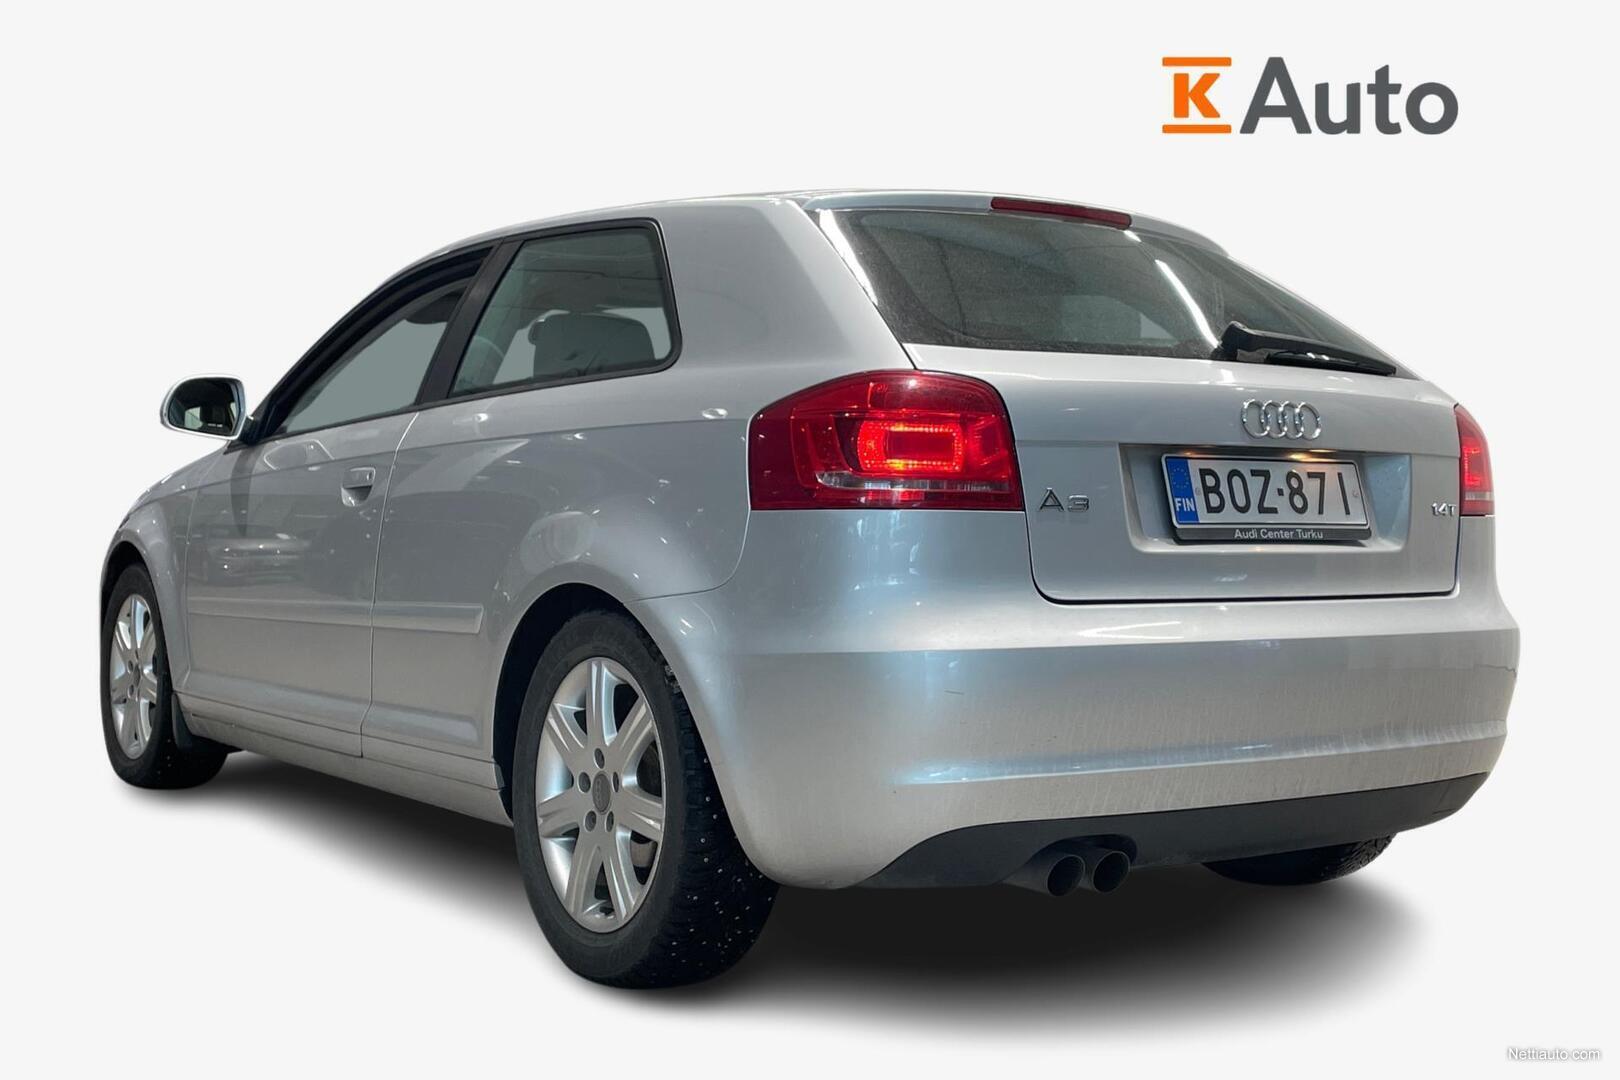 Audi A3 Compact Coupe Ambition Business 1,4 TFSI 92 kW S tronic **Siisti ja  vähän ajettu** Hatchback 2009 - Used vehicle - Nettiauto